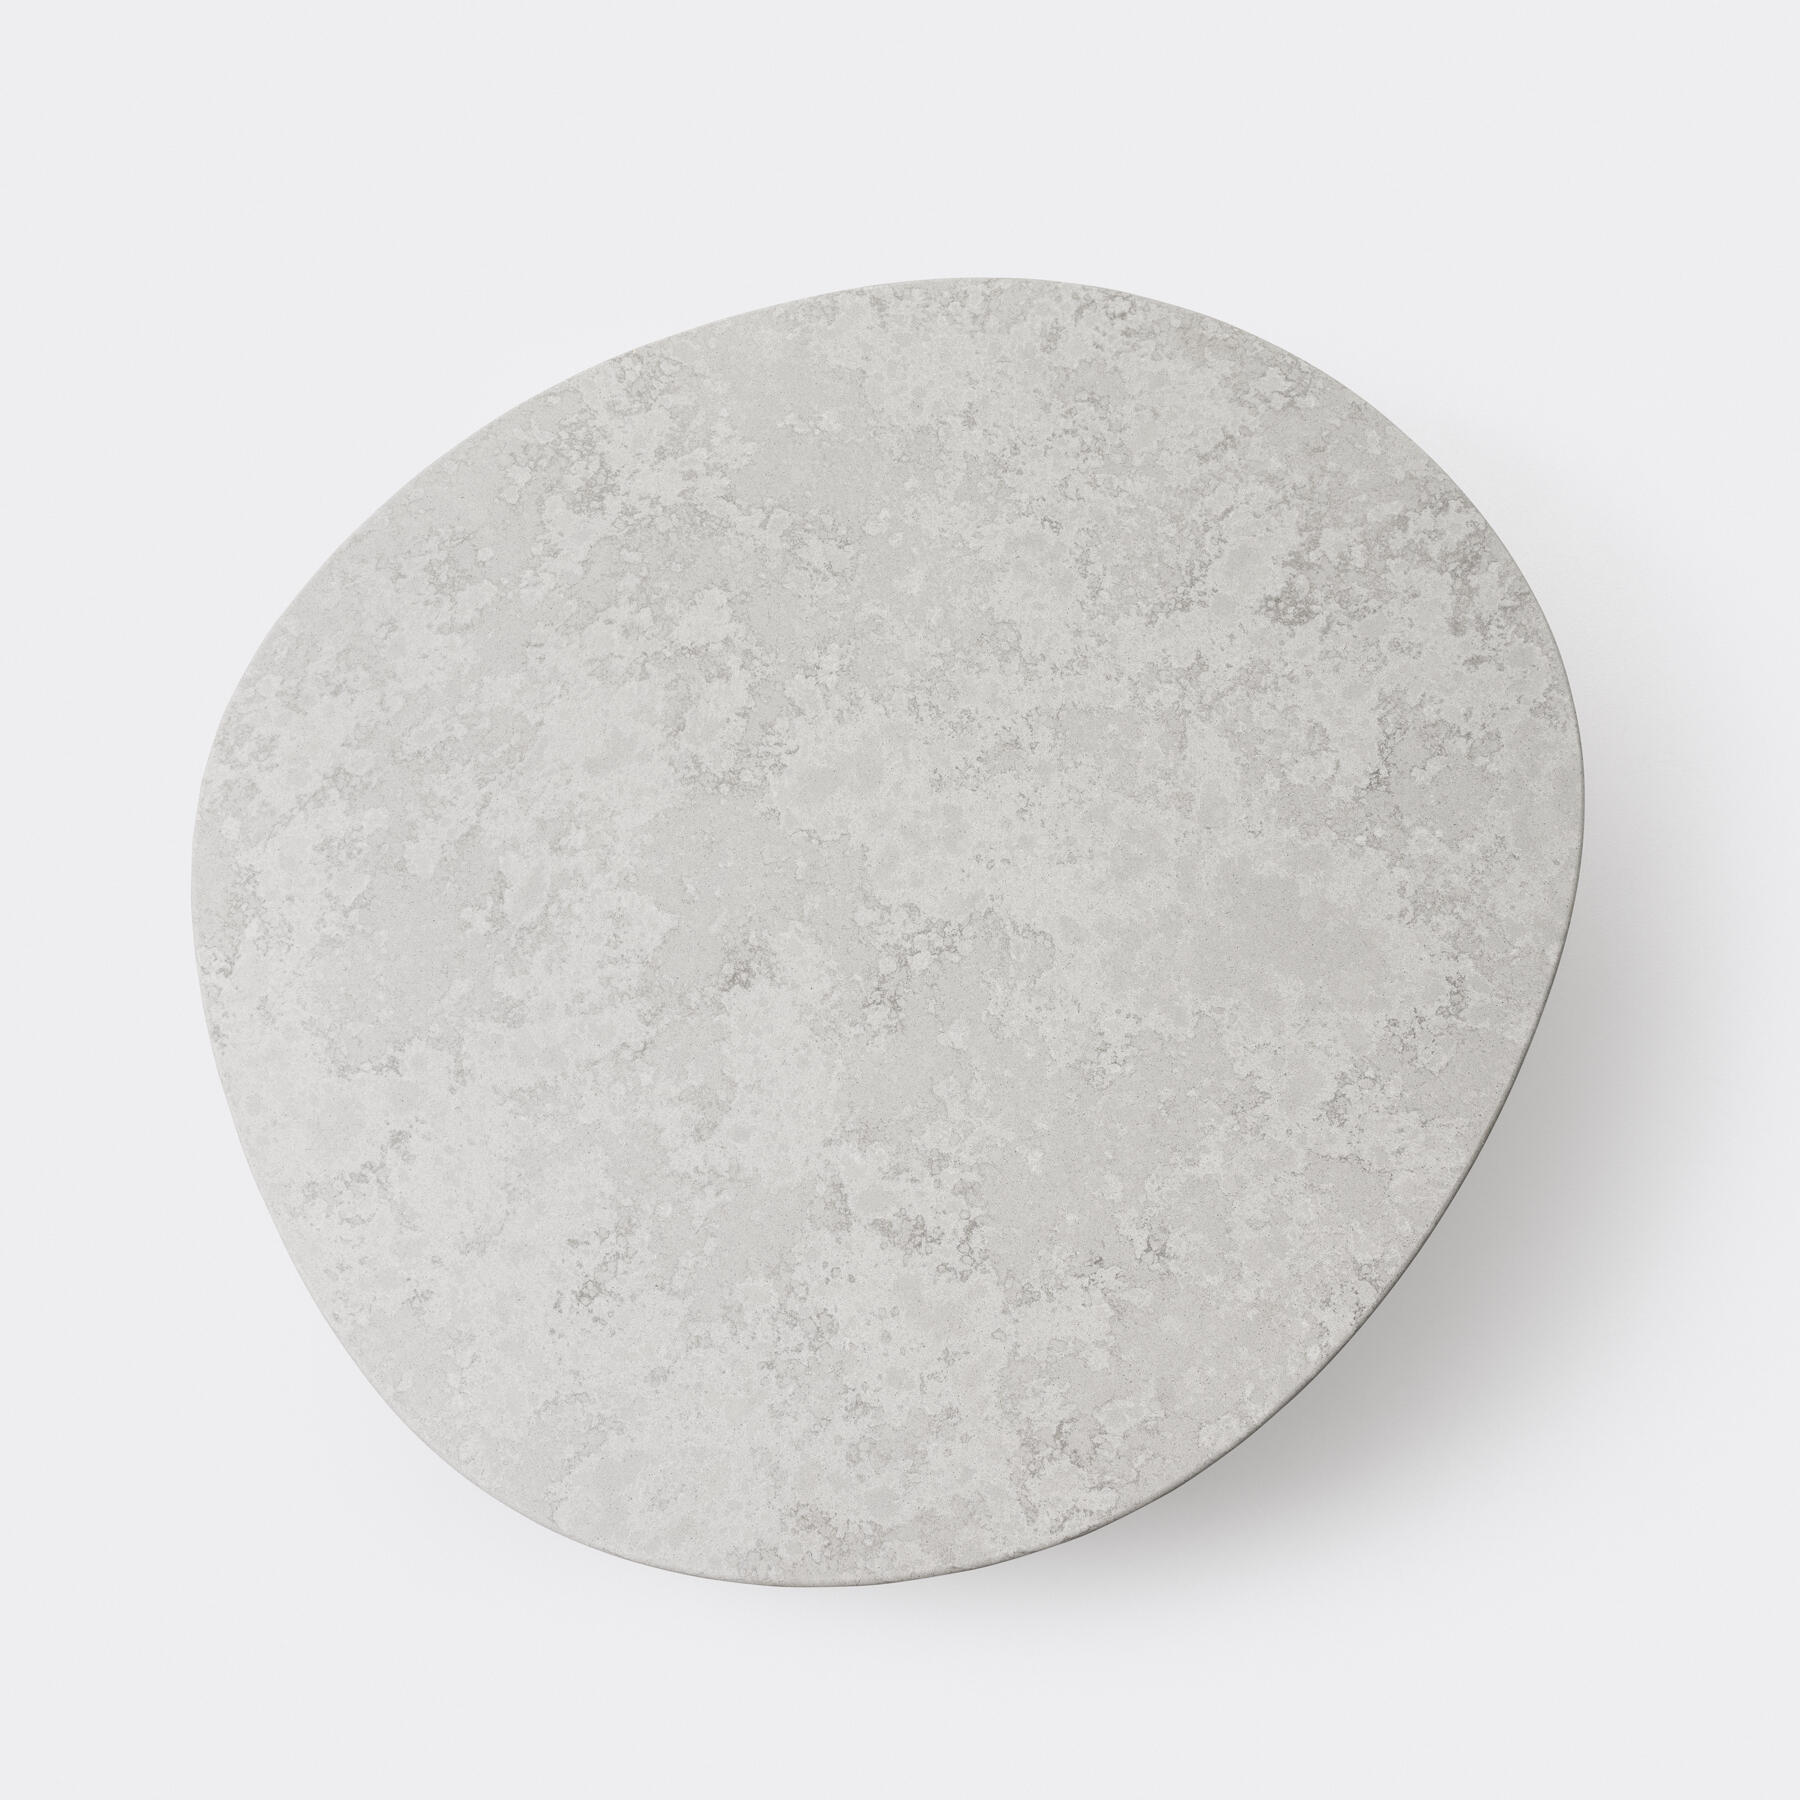 Satellite Table, Size 3, Lunar Grey, Grey Metallic